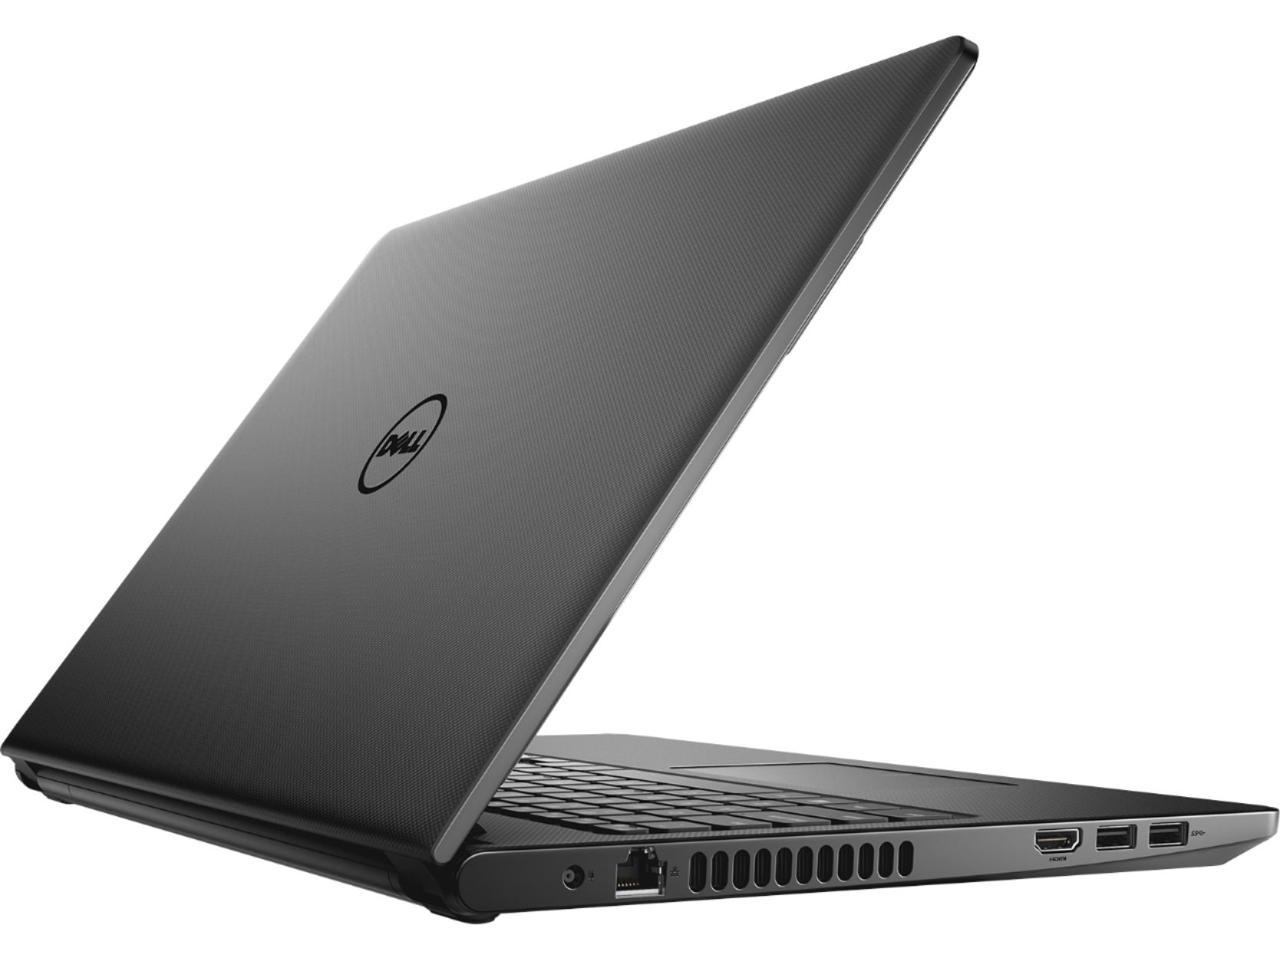 Dell Inspiron 15 Laptop: Core i5-7200U, 256GB SSD, 8GB RAM, 15.6